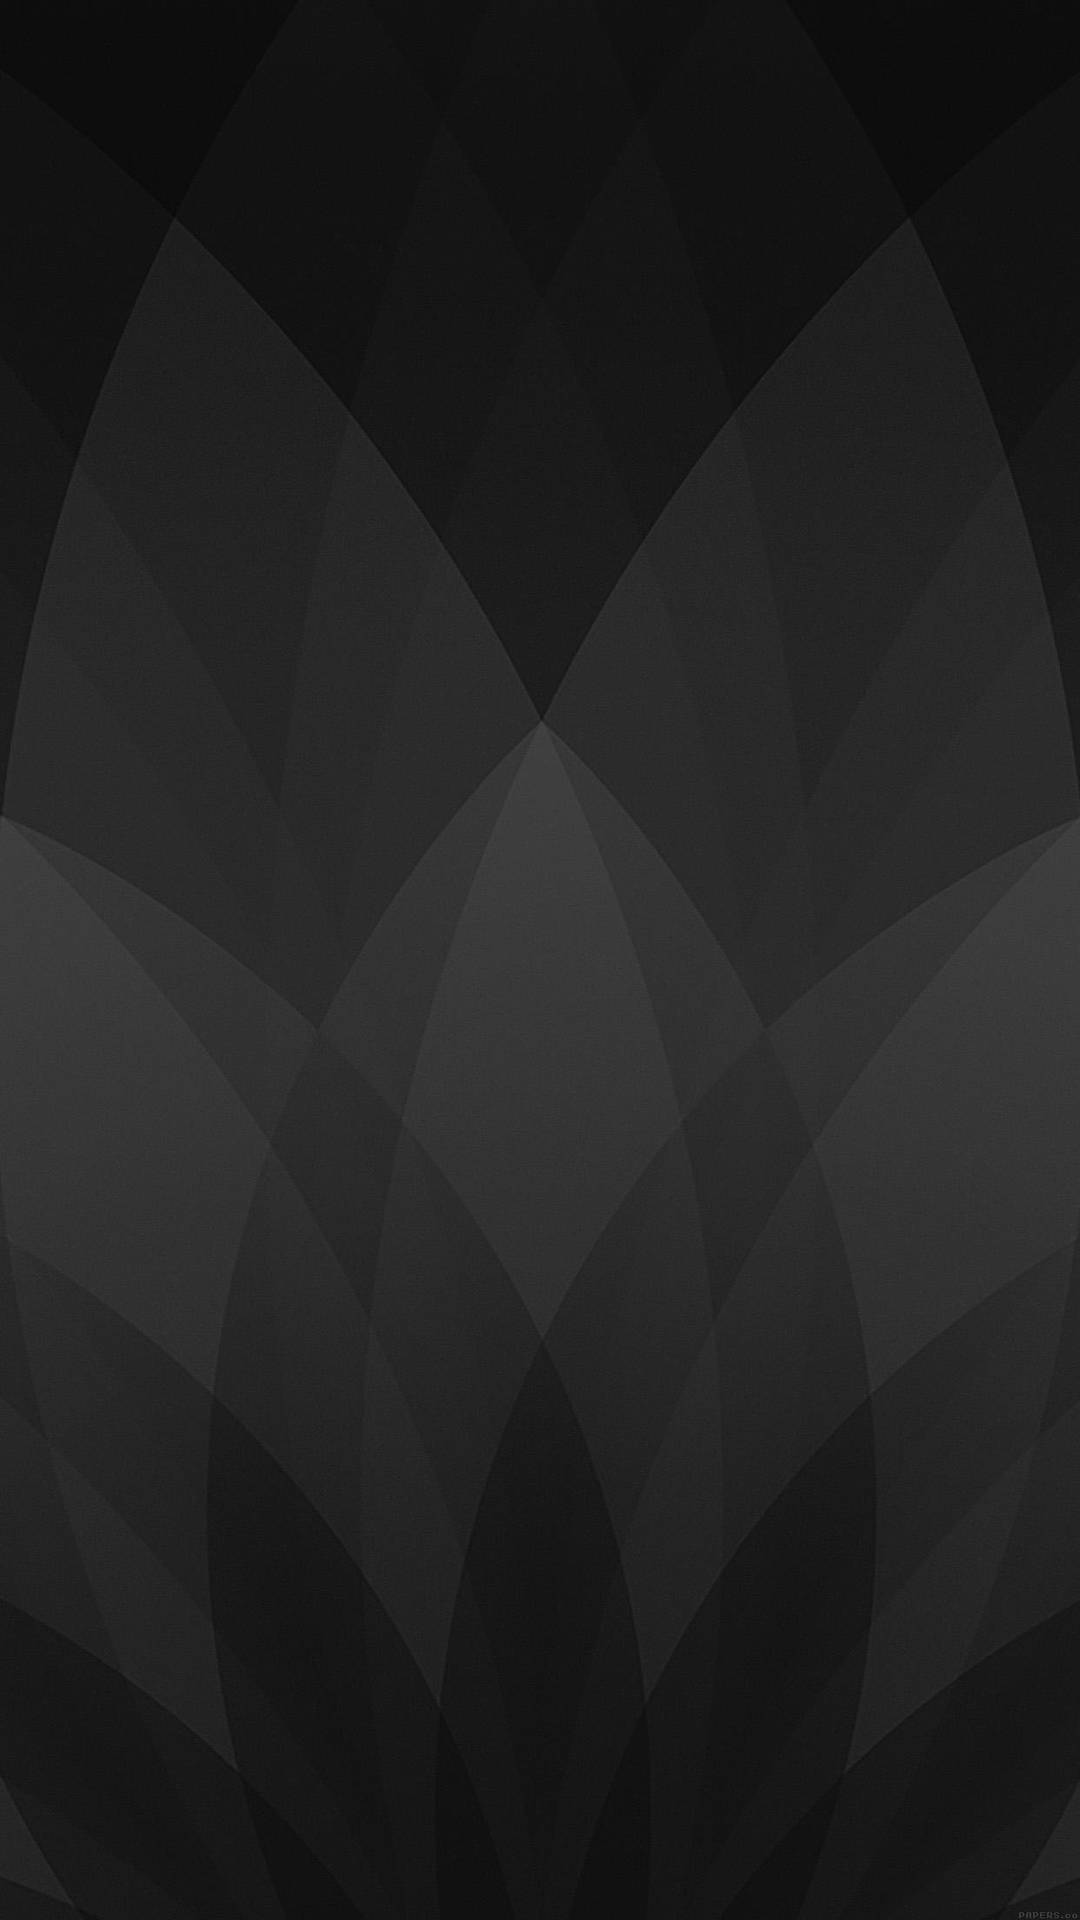 Petals Design Black And Grey Iphone Background